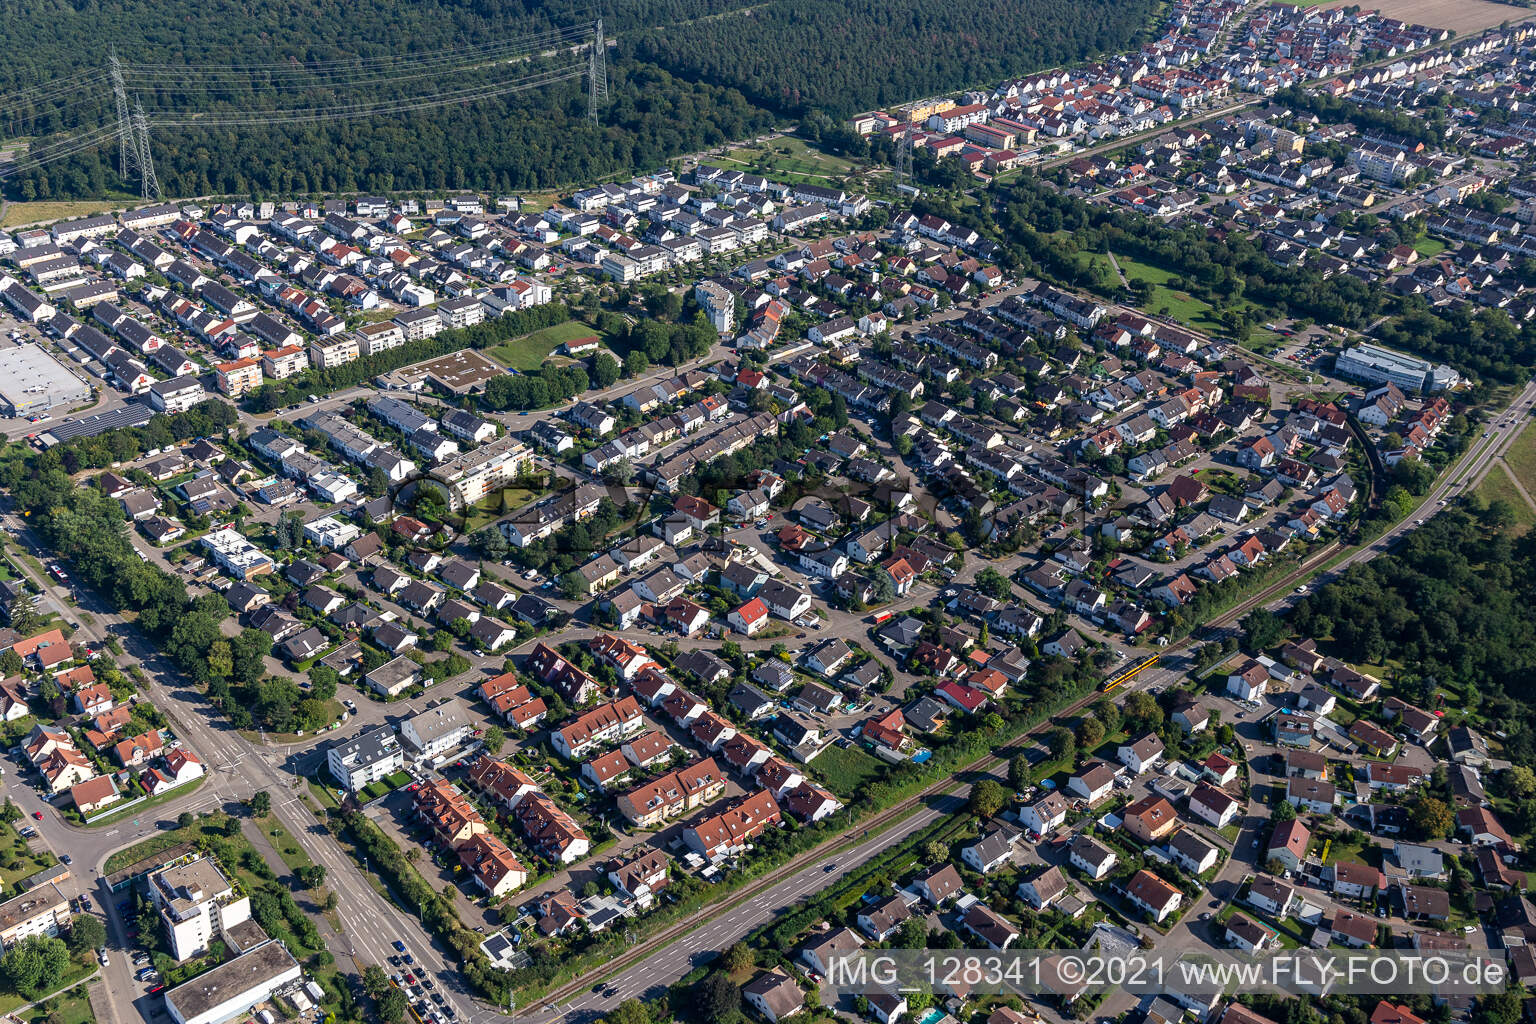 Drone image of District Leopoldshafen in Eggenstein-Leopoldshafen in the state Baden-Wuerttemberg, Germany